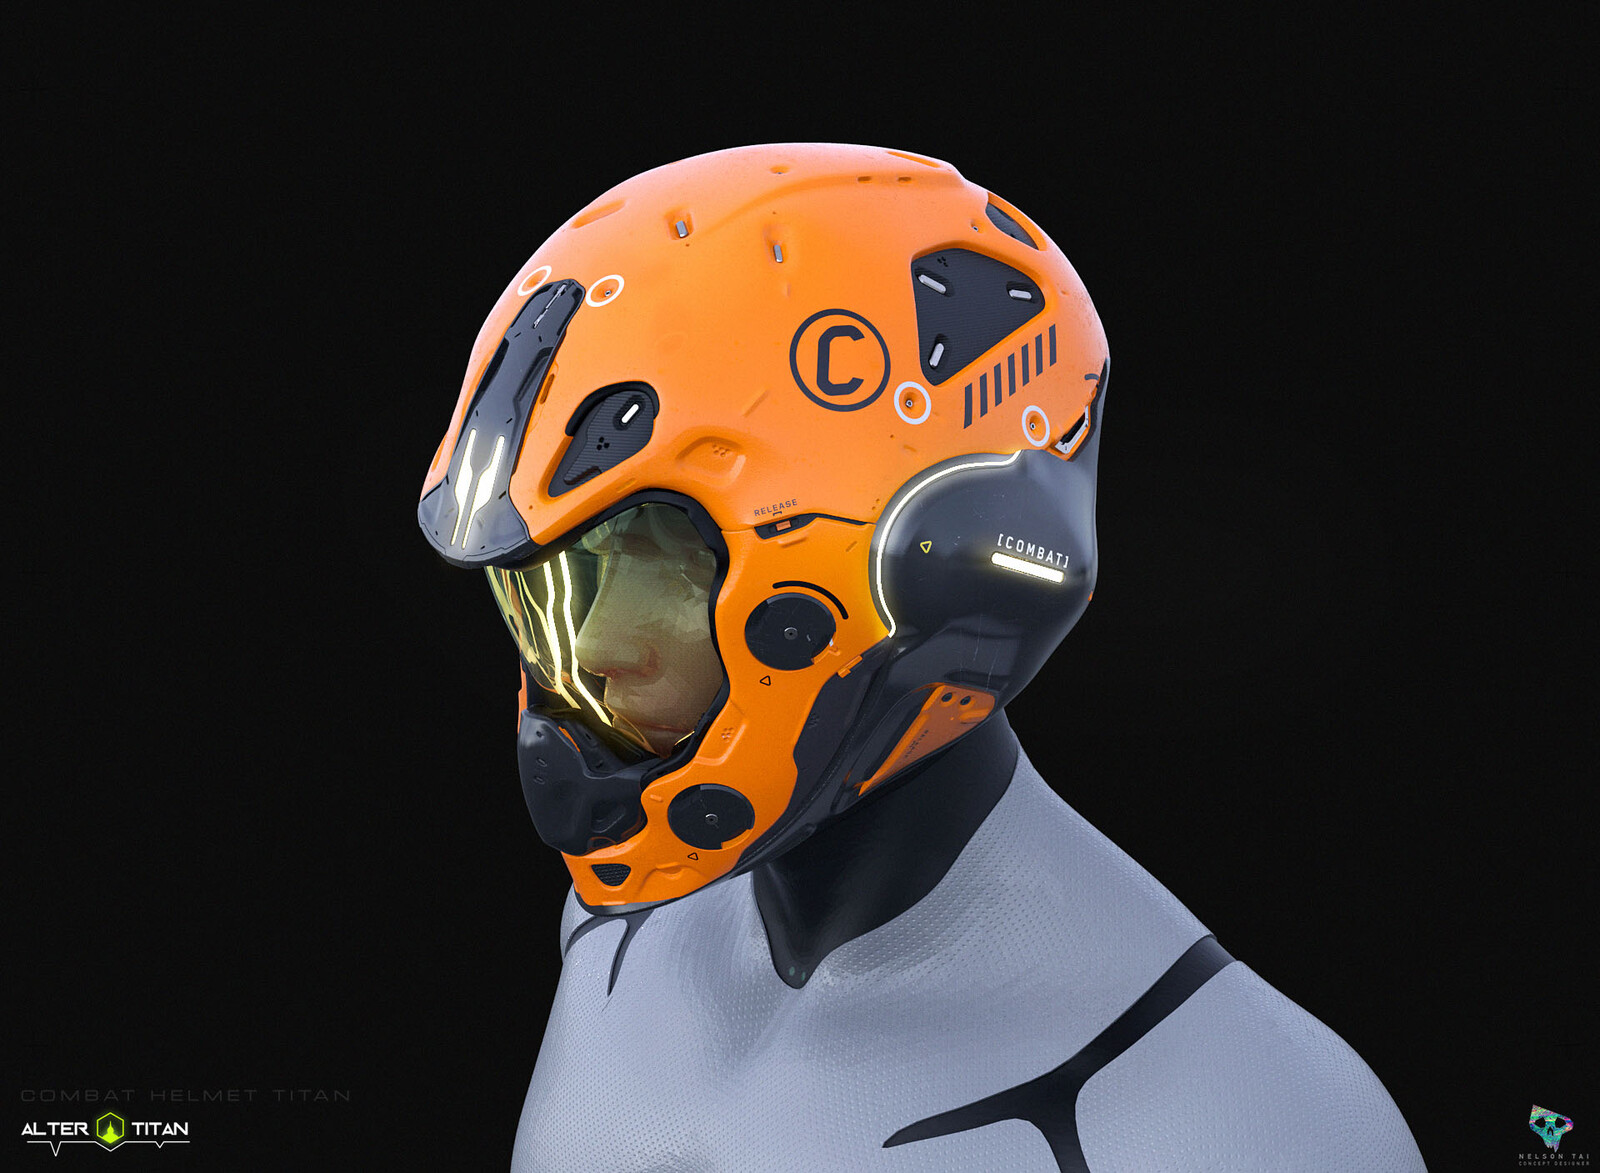 Combat Helmet - standard issue for Titans